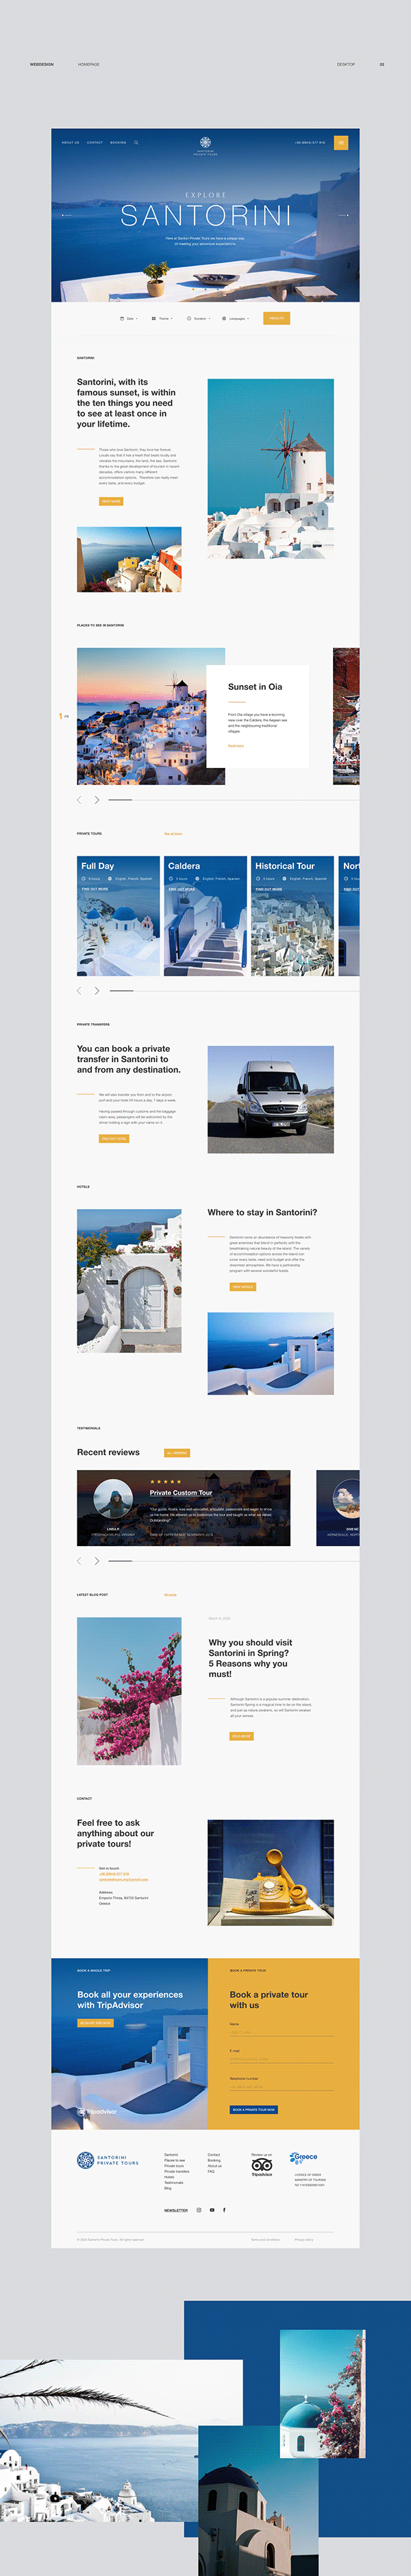 Santorini Private Tours: Brand Identity + Website